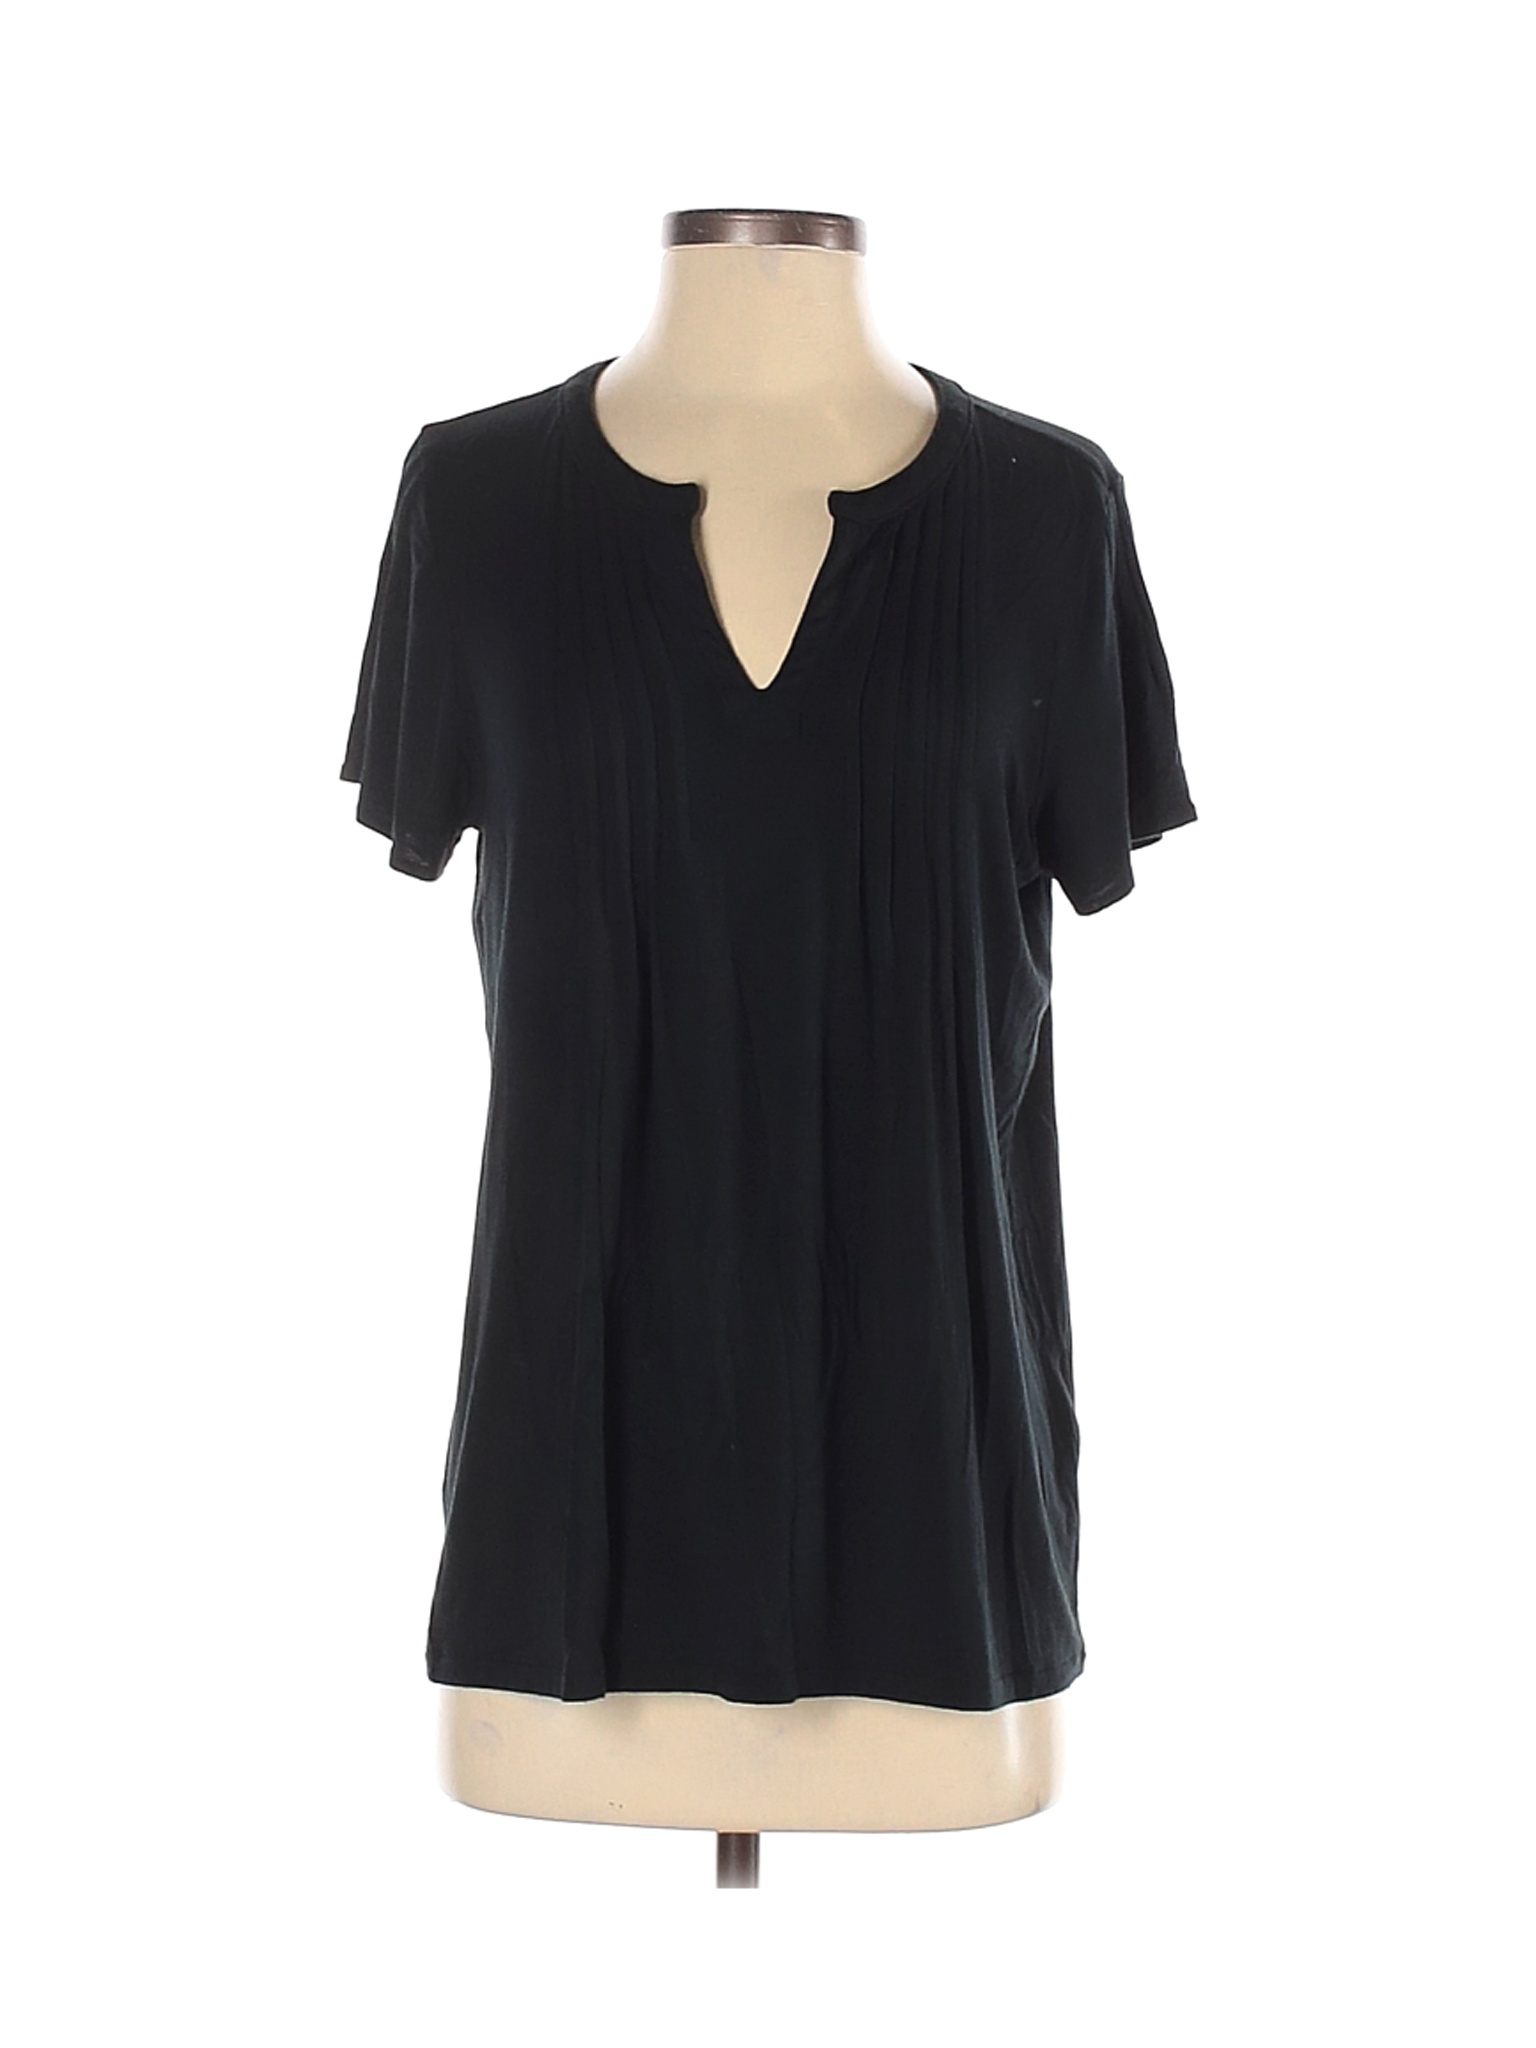 Banana Republic Factory Store Women Black Short Sleeve Top S | eBay